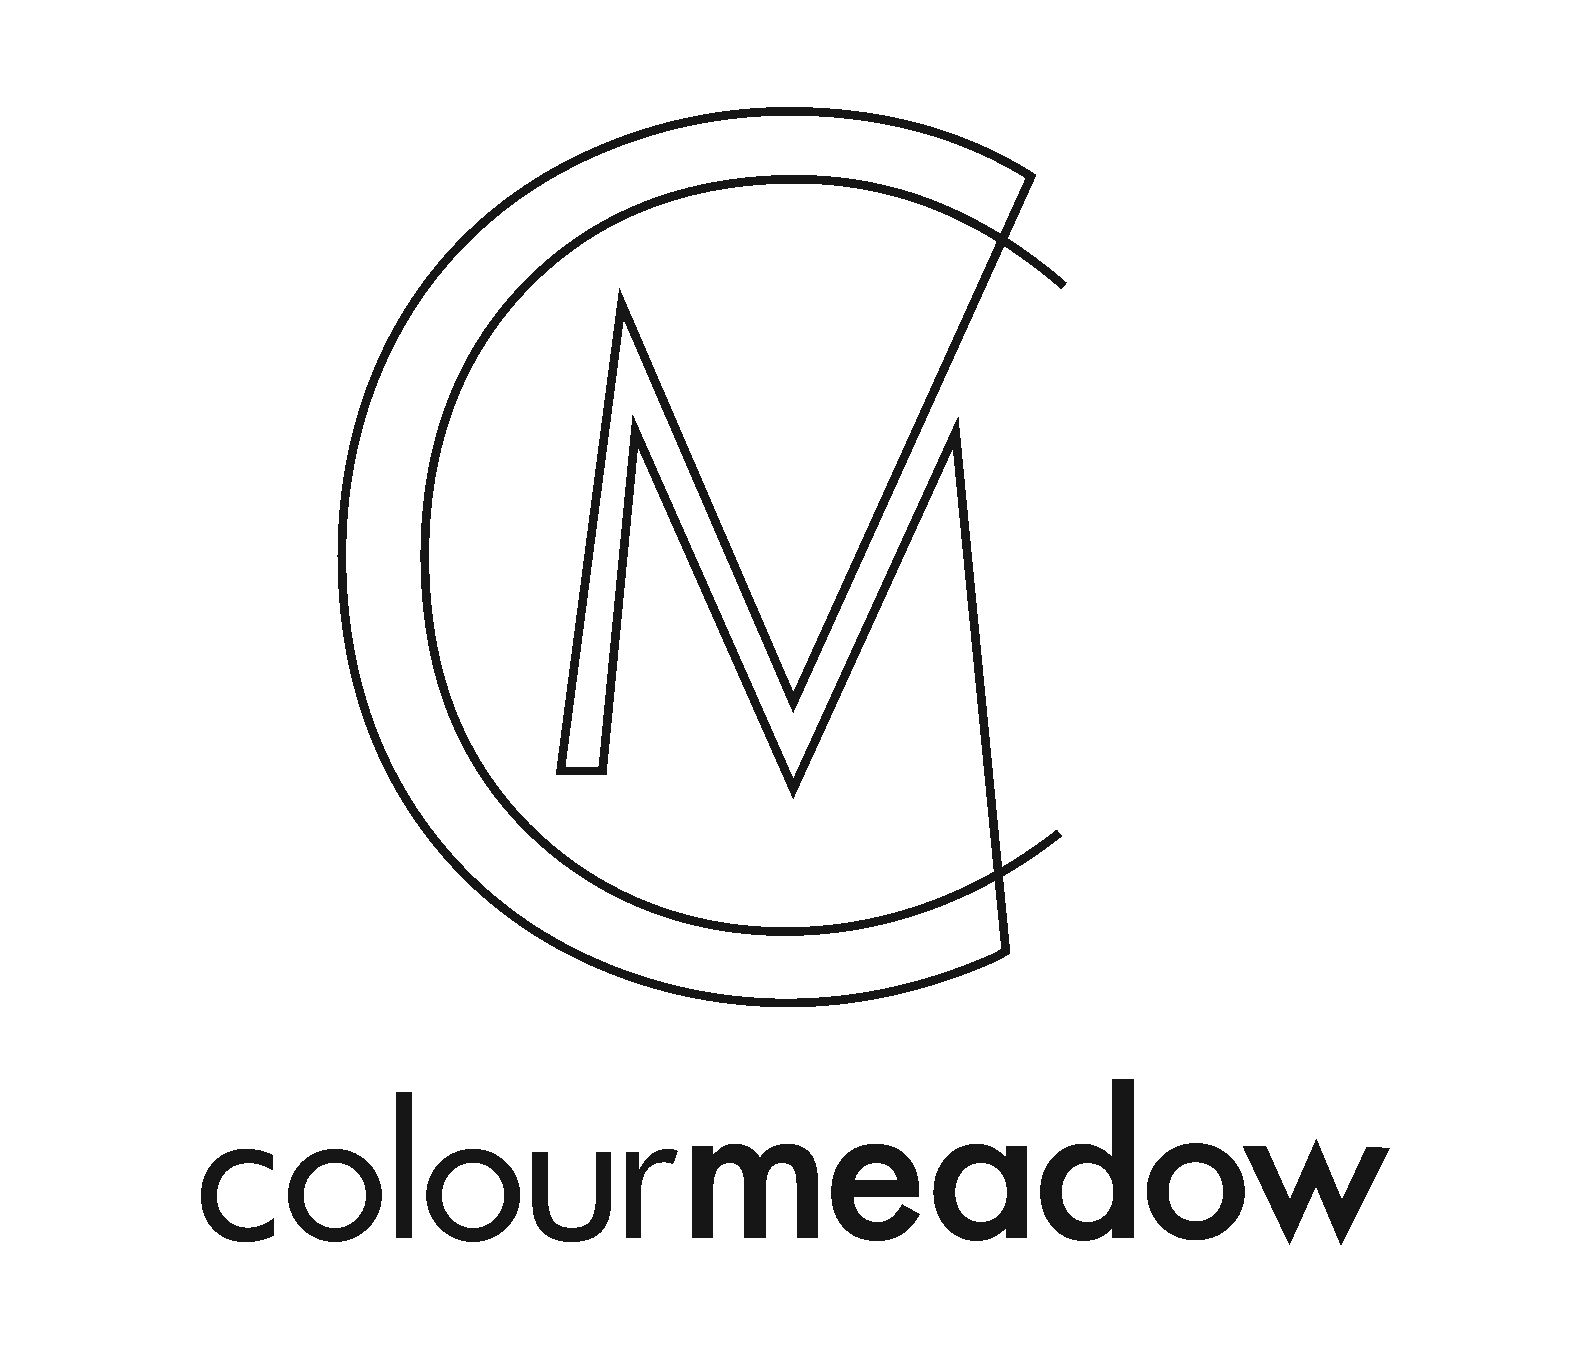 colourmeadow